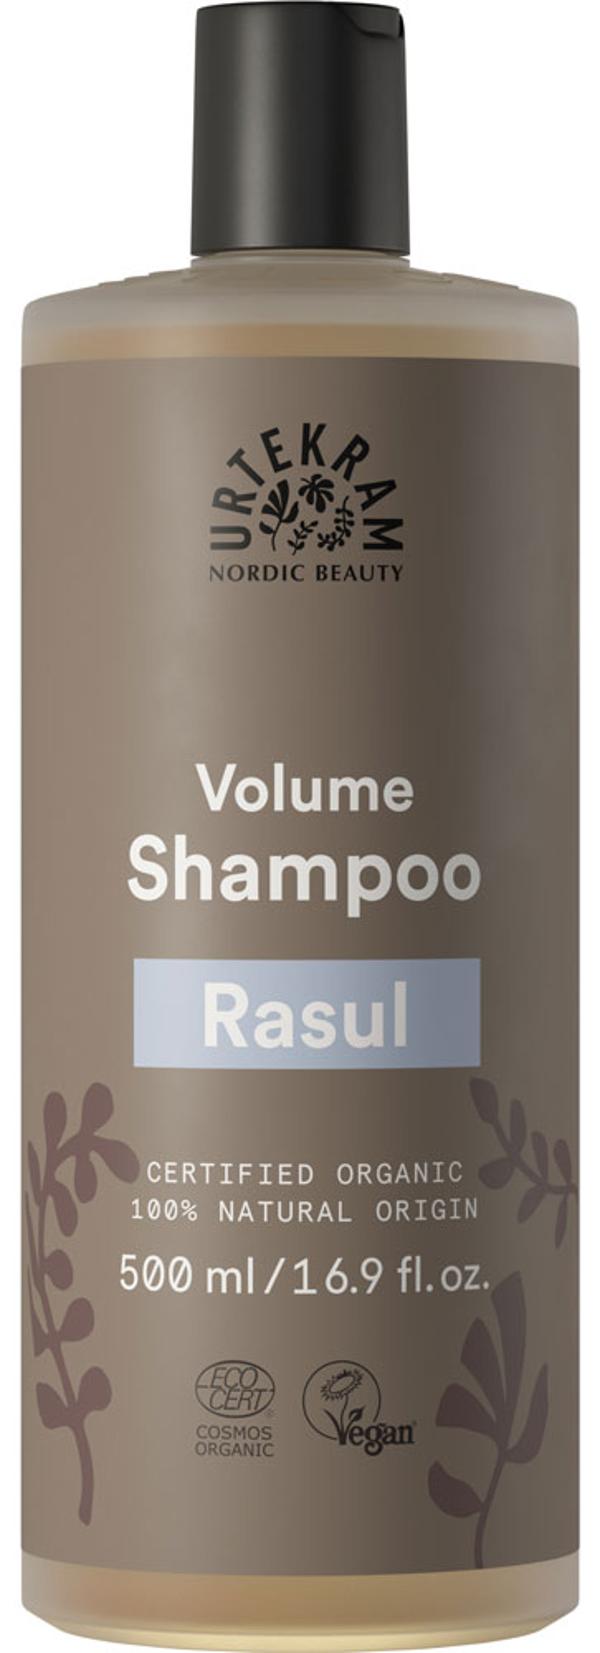 Produktfoto zu Urtekram Rasul Shampoo 500ml